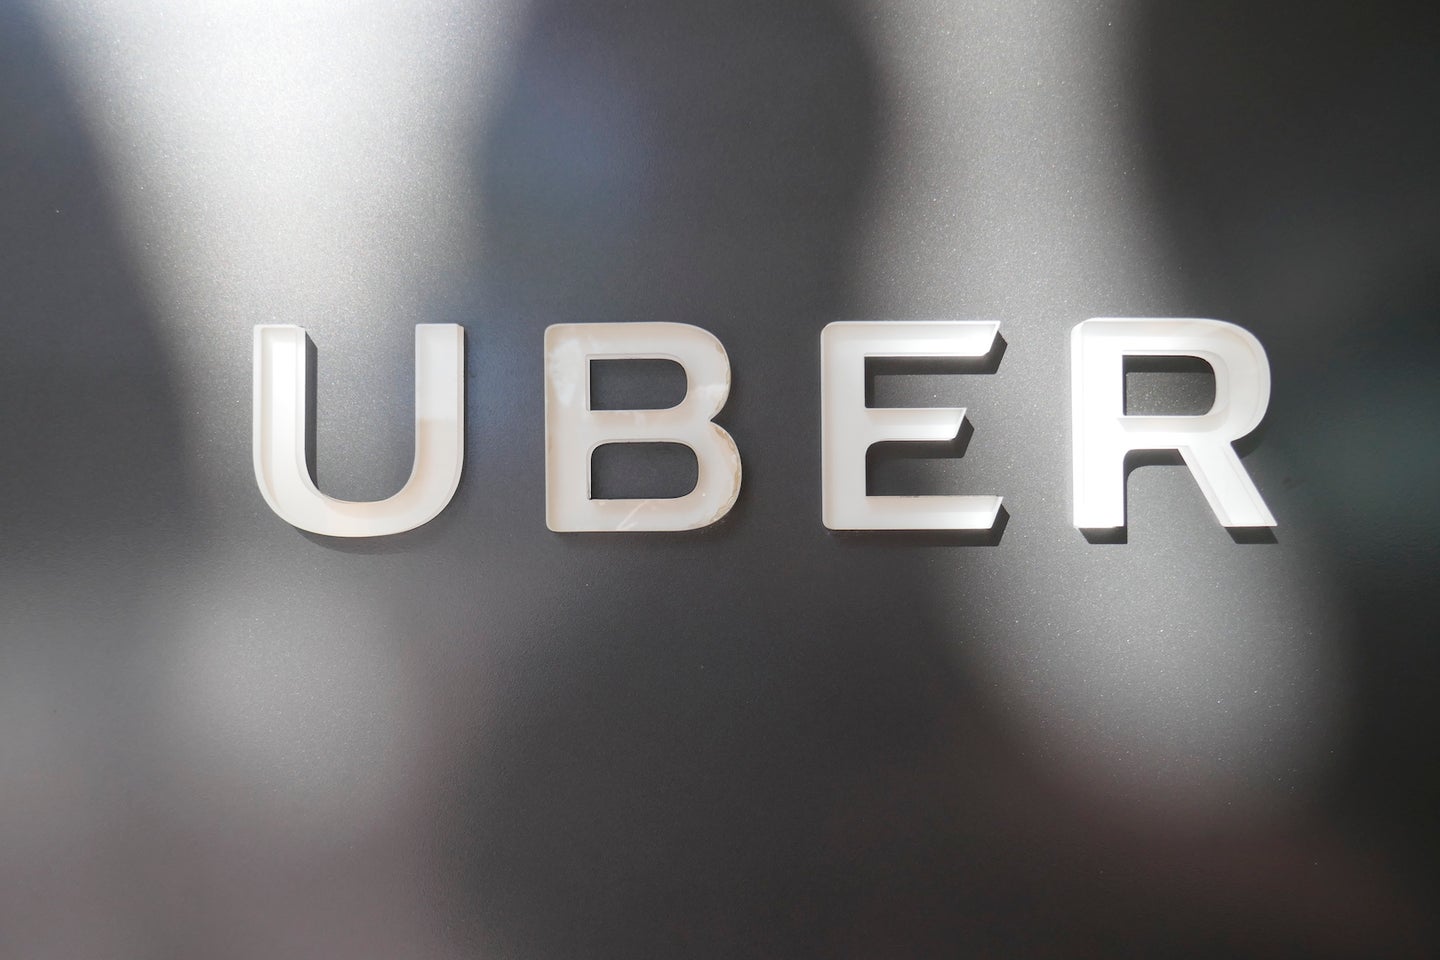 Peer-to-peer ridesharing provider Uber